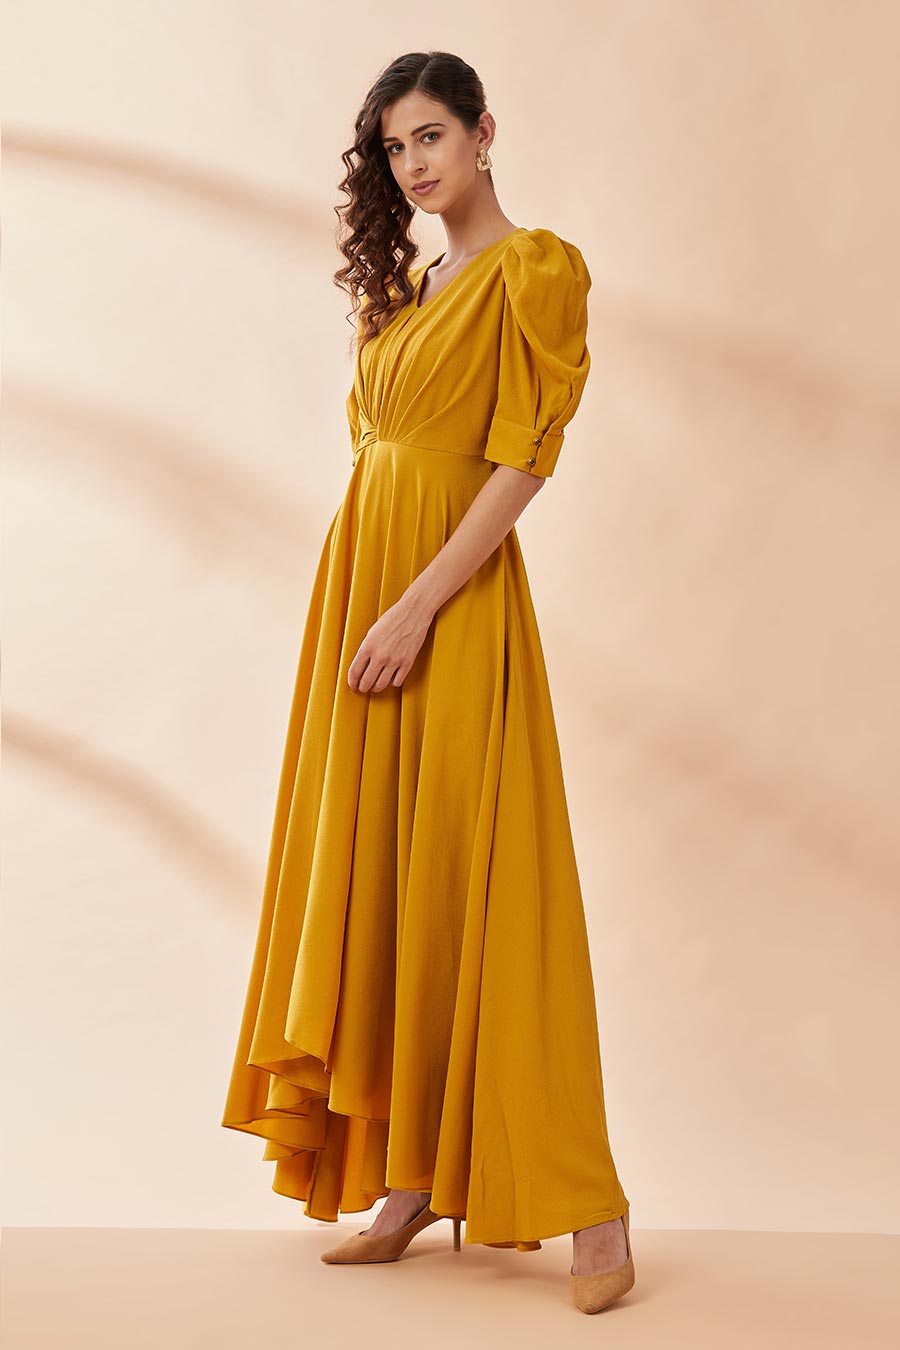 Mustard Yellow Drape Gown Dress